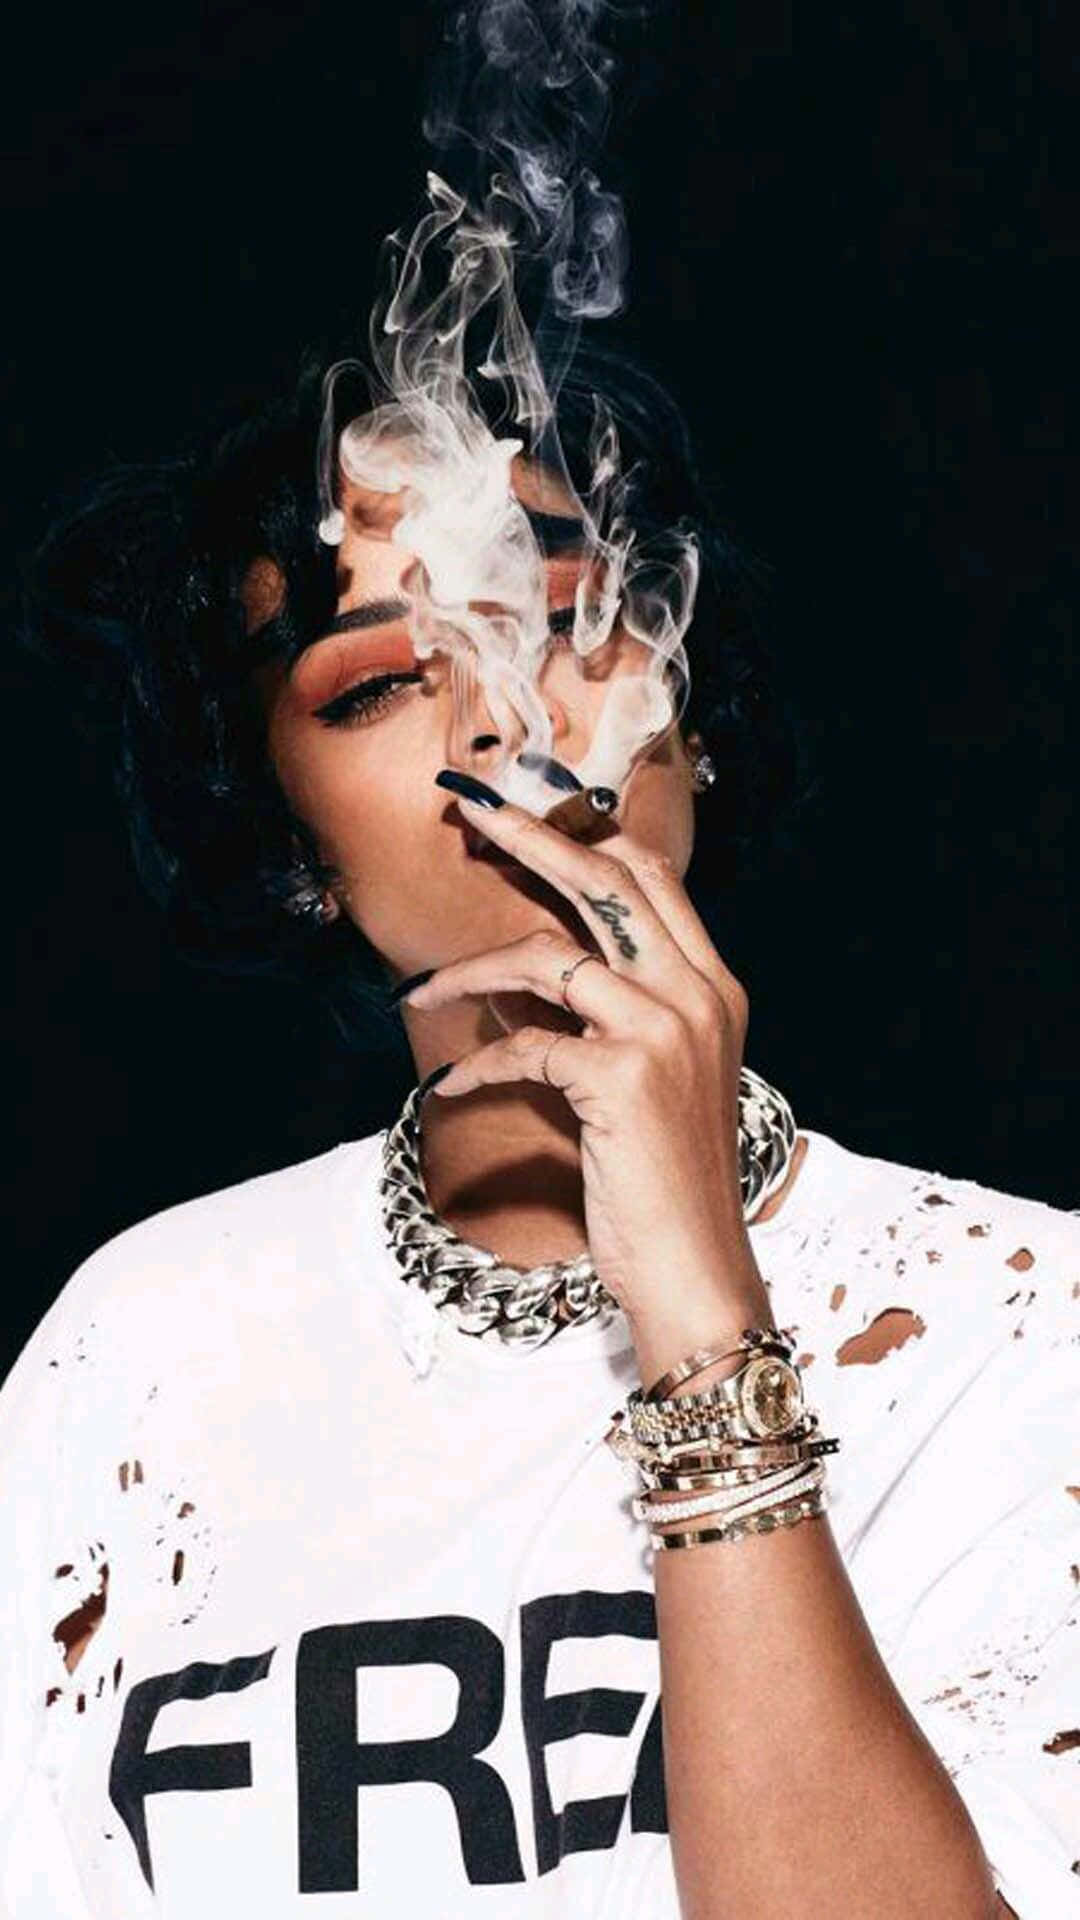 Free Rihanna Wallpaper Downloads, Rihanna Wallpaper for FREE